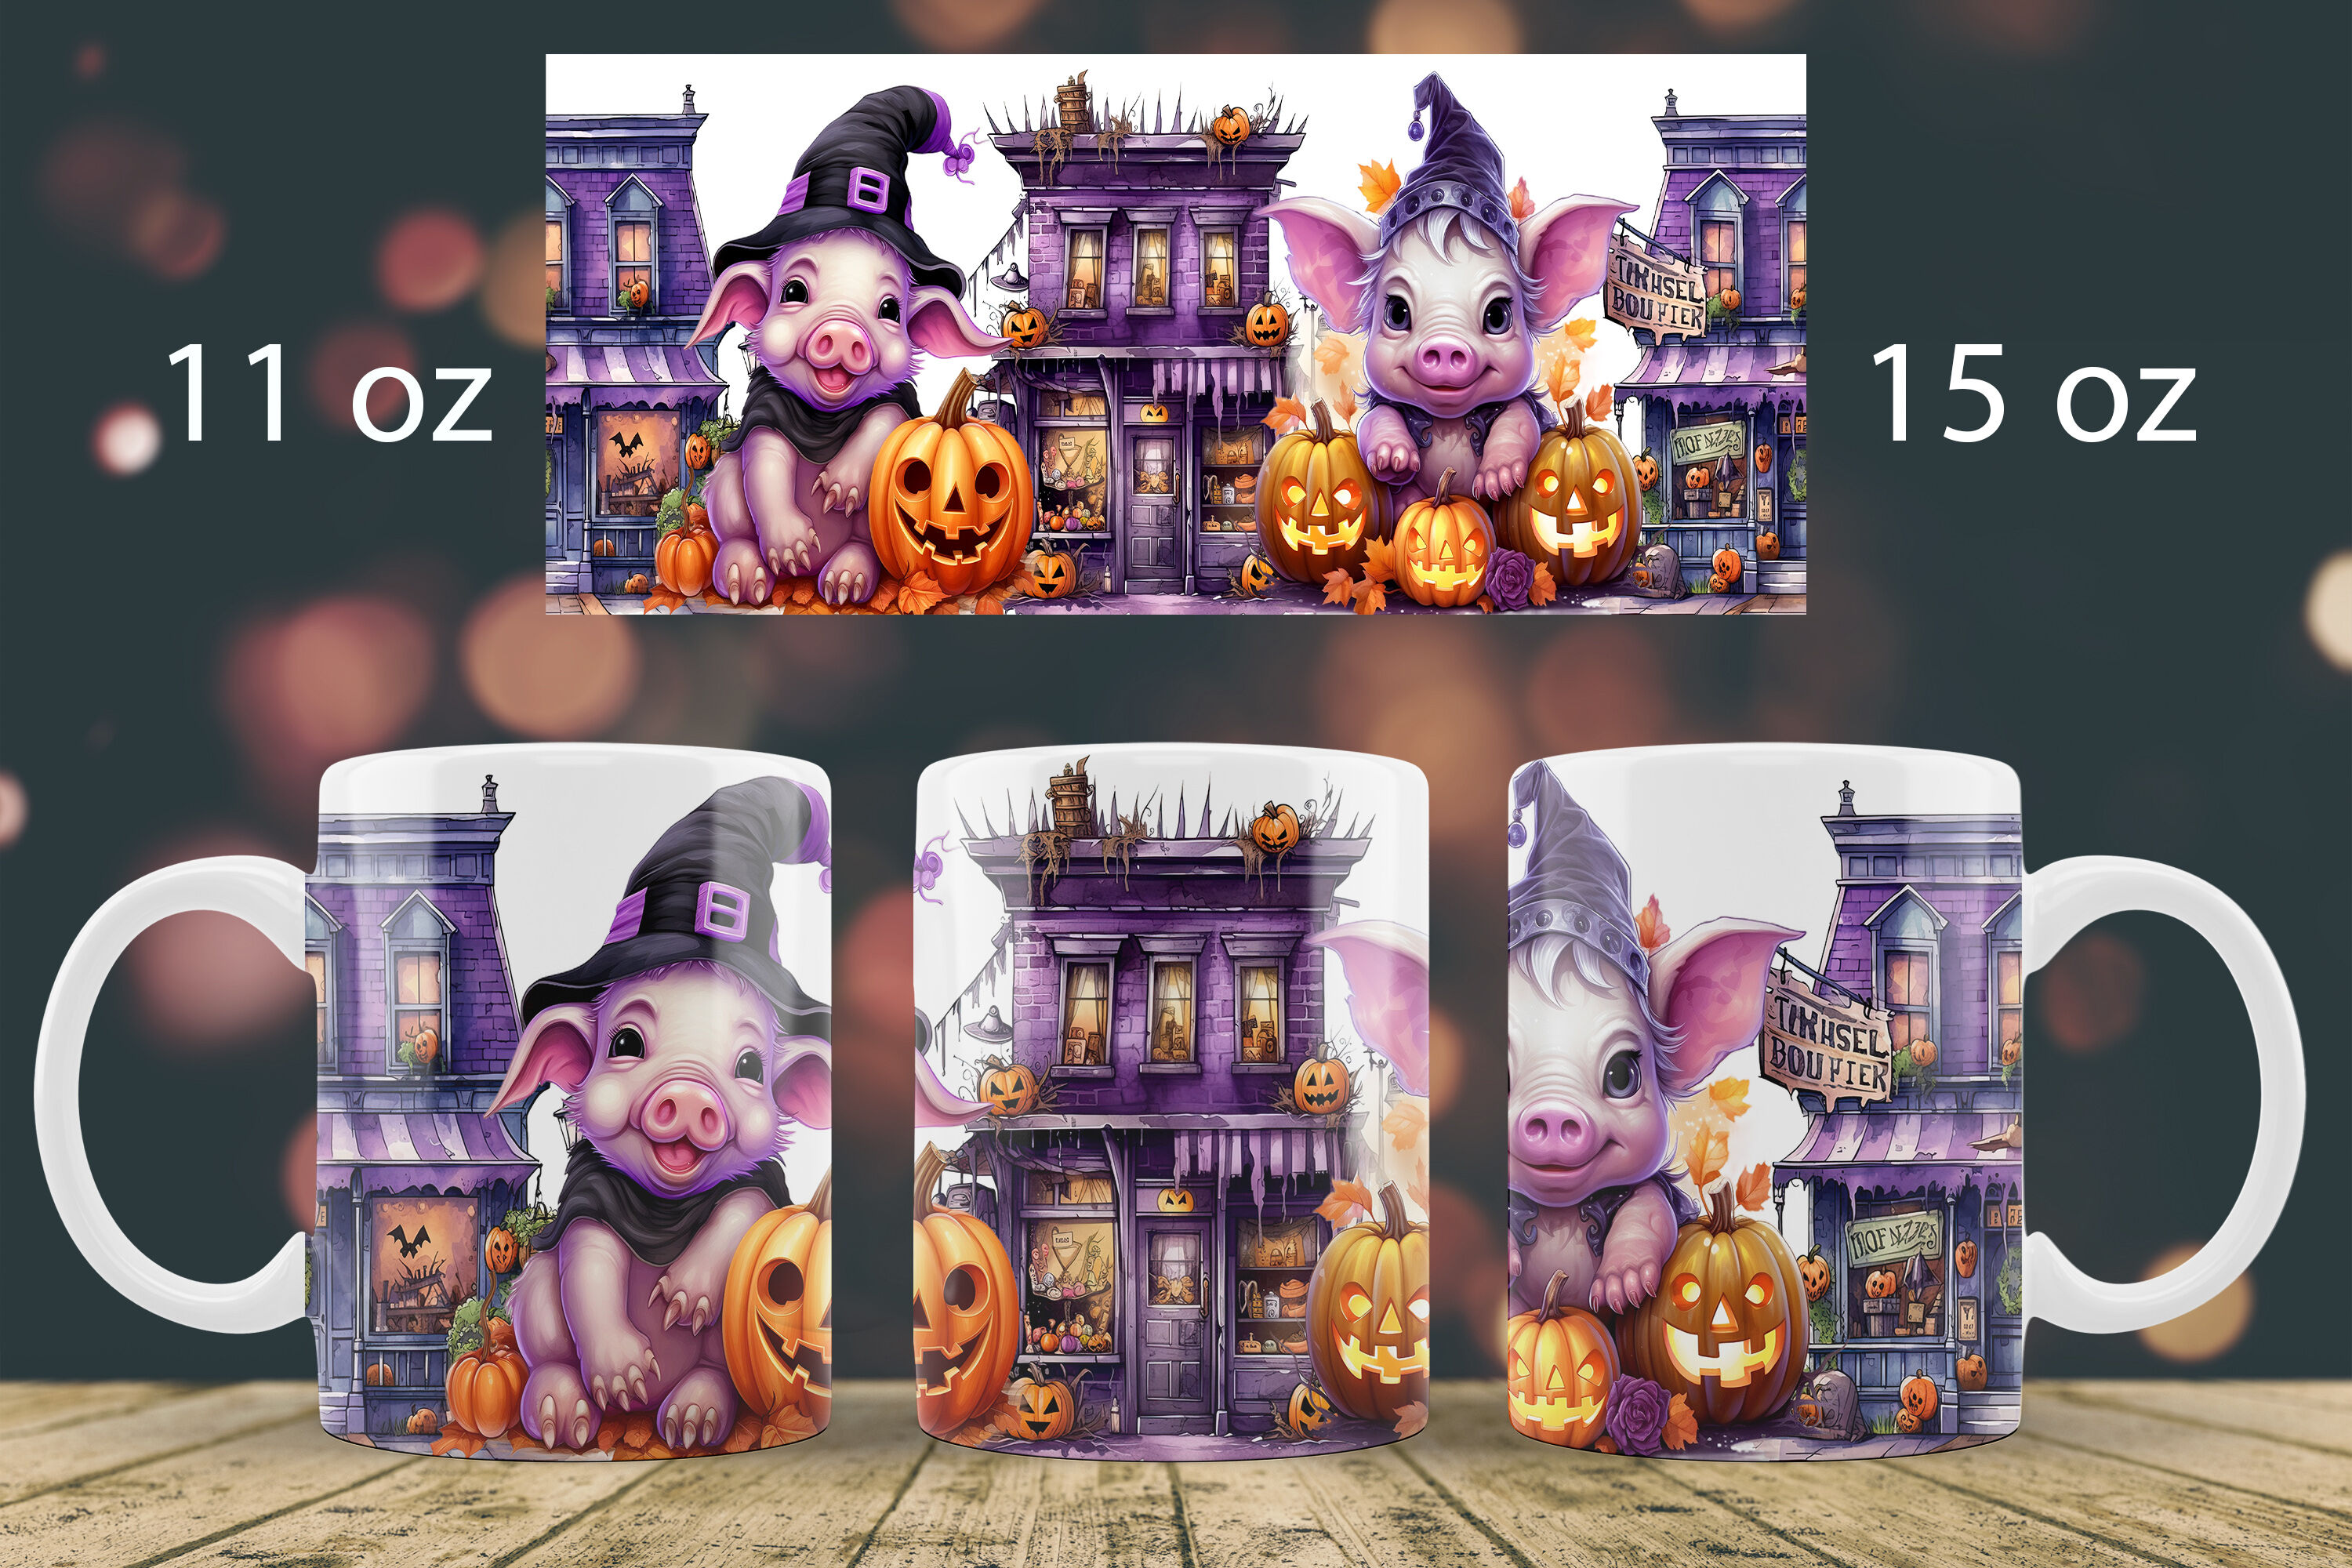 Halloween Mug Wrap, Halloween Sublimation Design 11oz & 15oz - So Fontsy